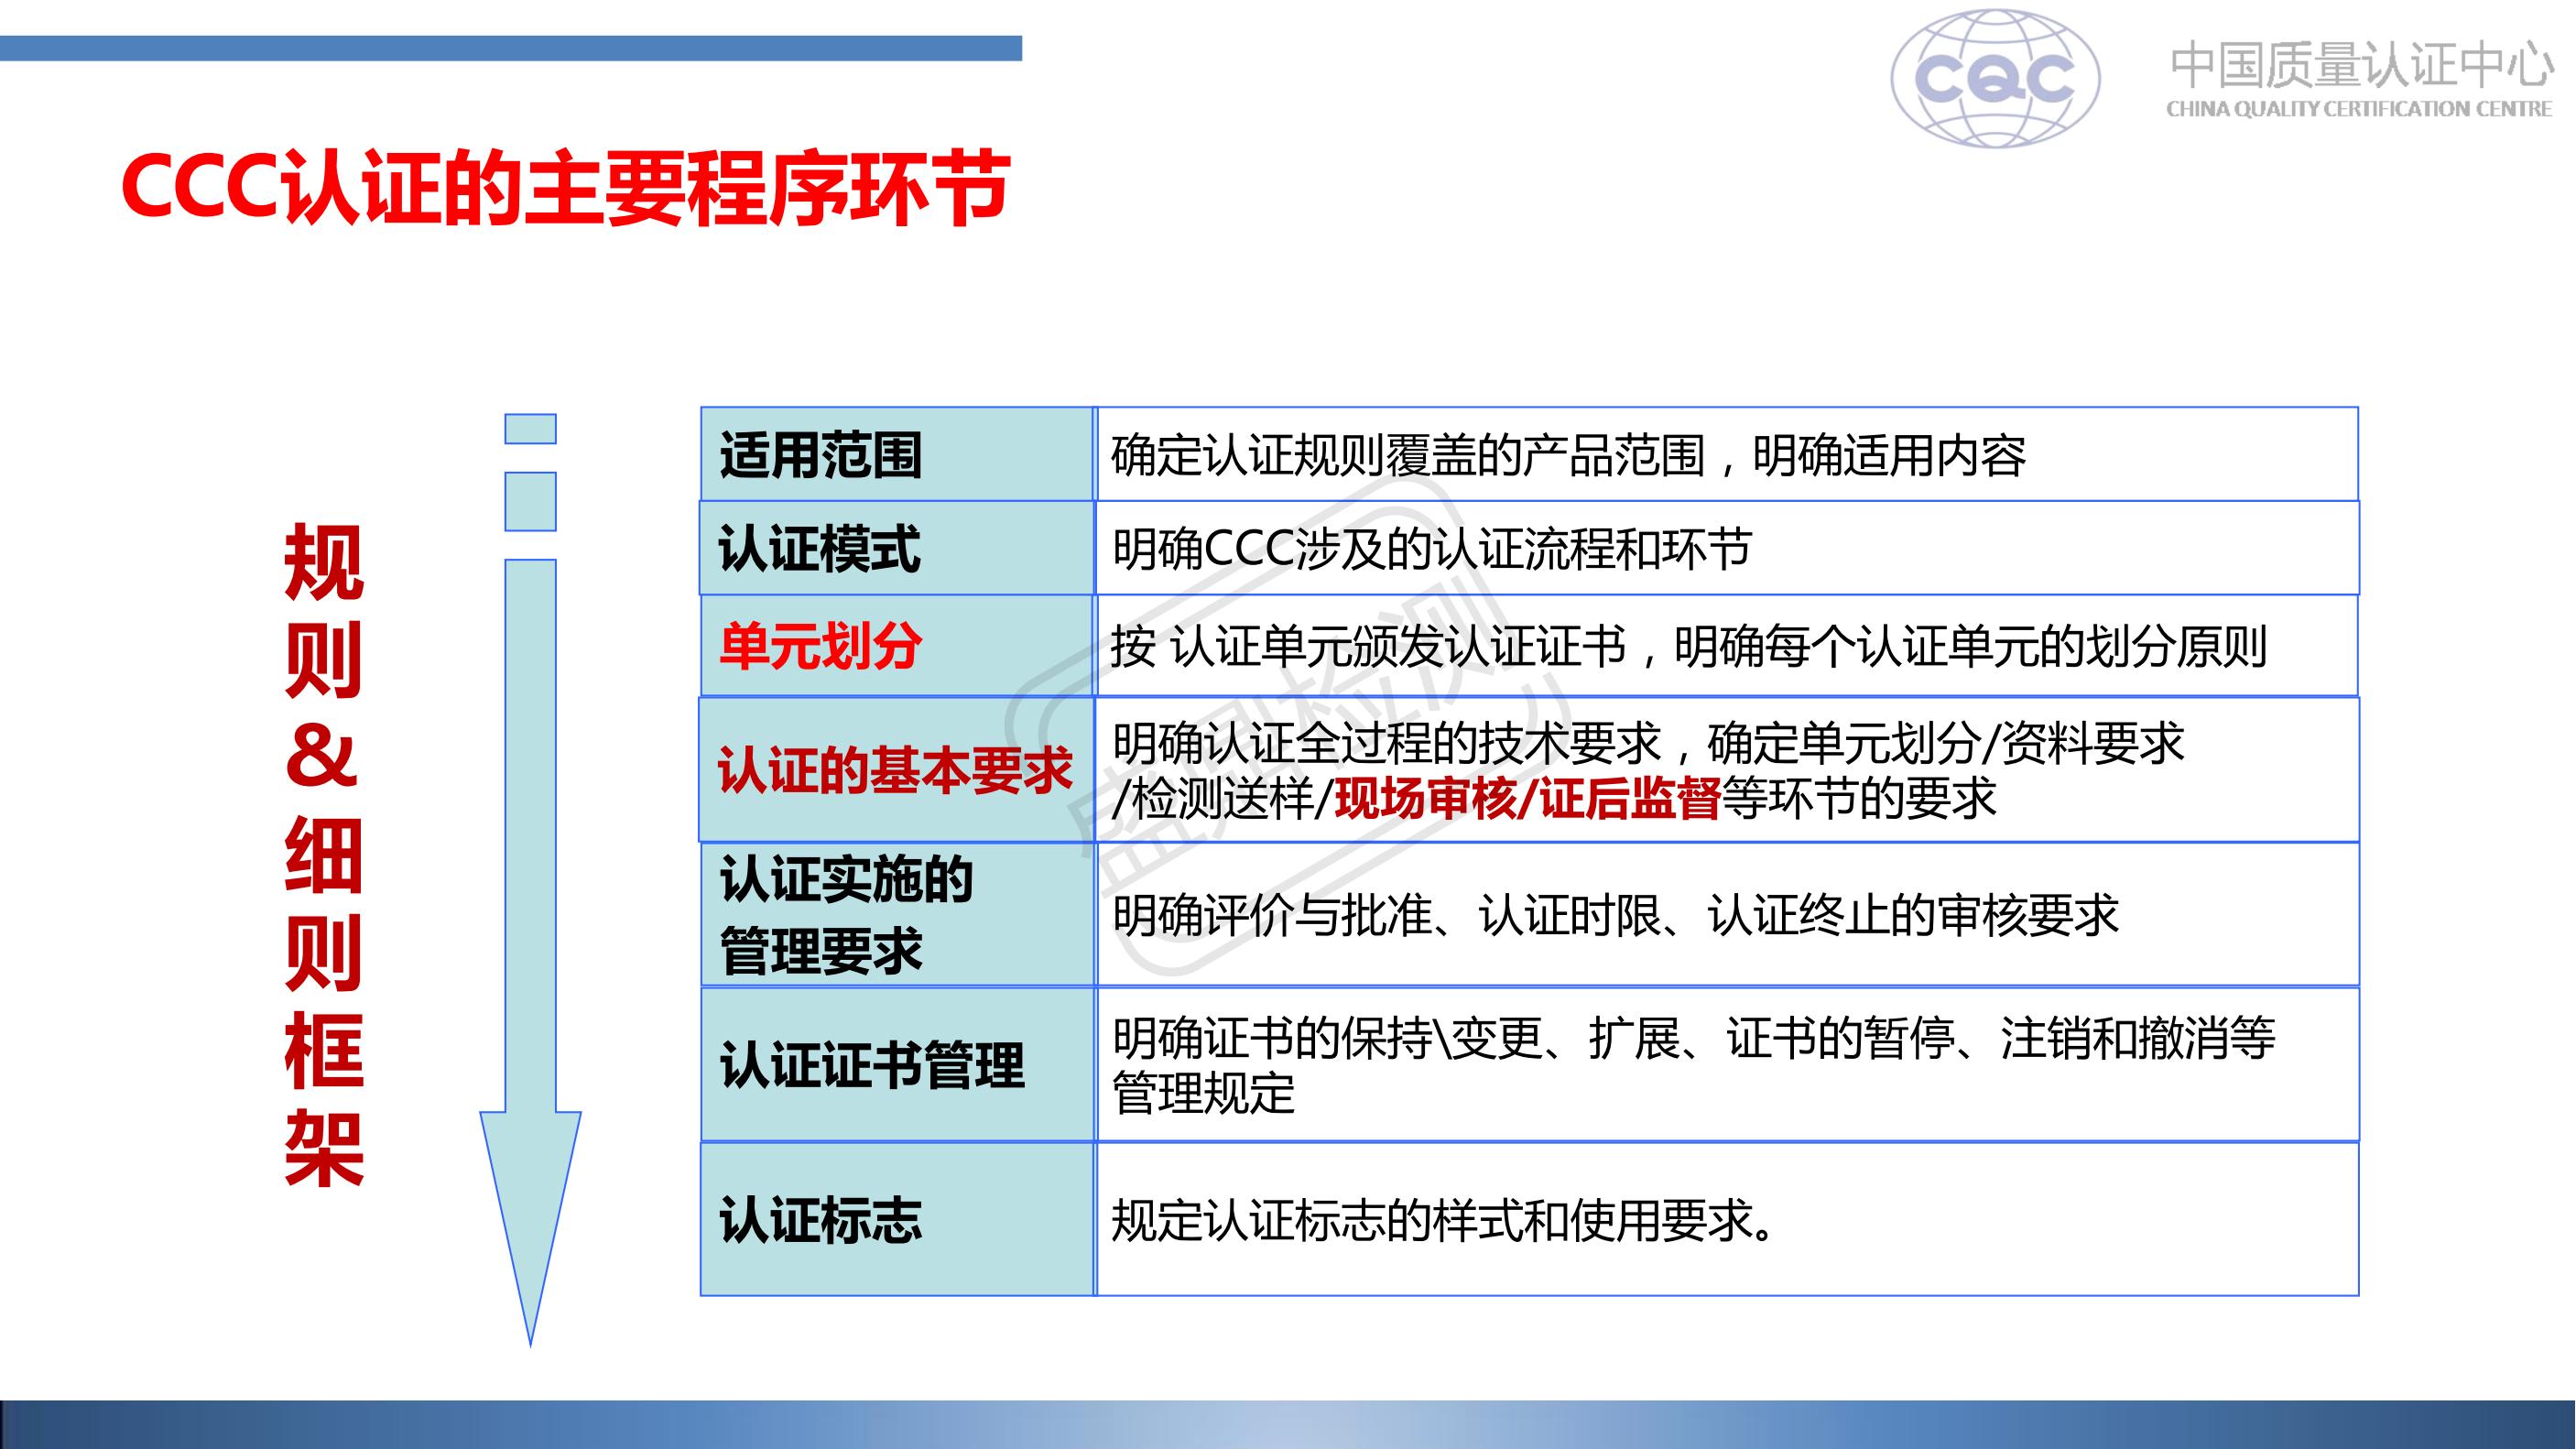 CCC认证的主要程序环节